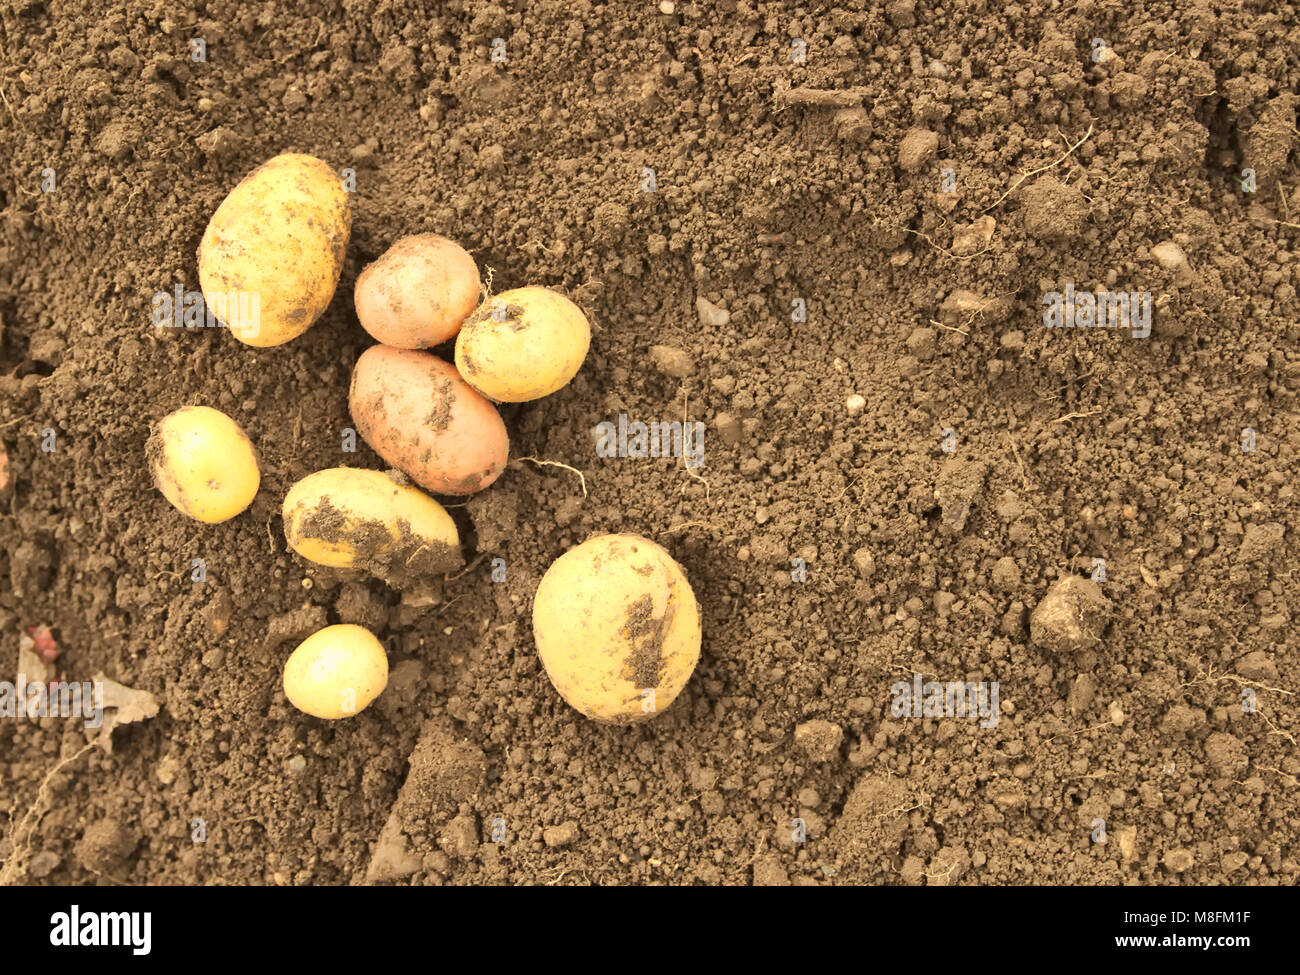 Harvested Raw Potato on Garden Soil Stock Photo